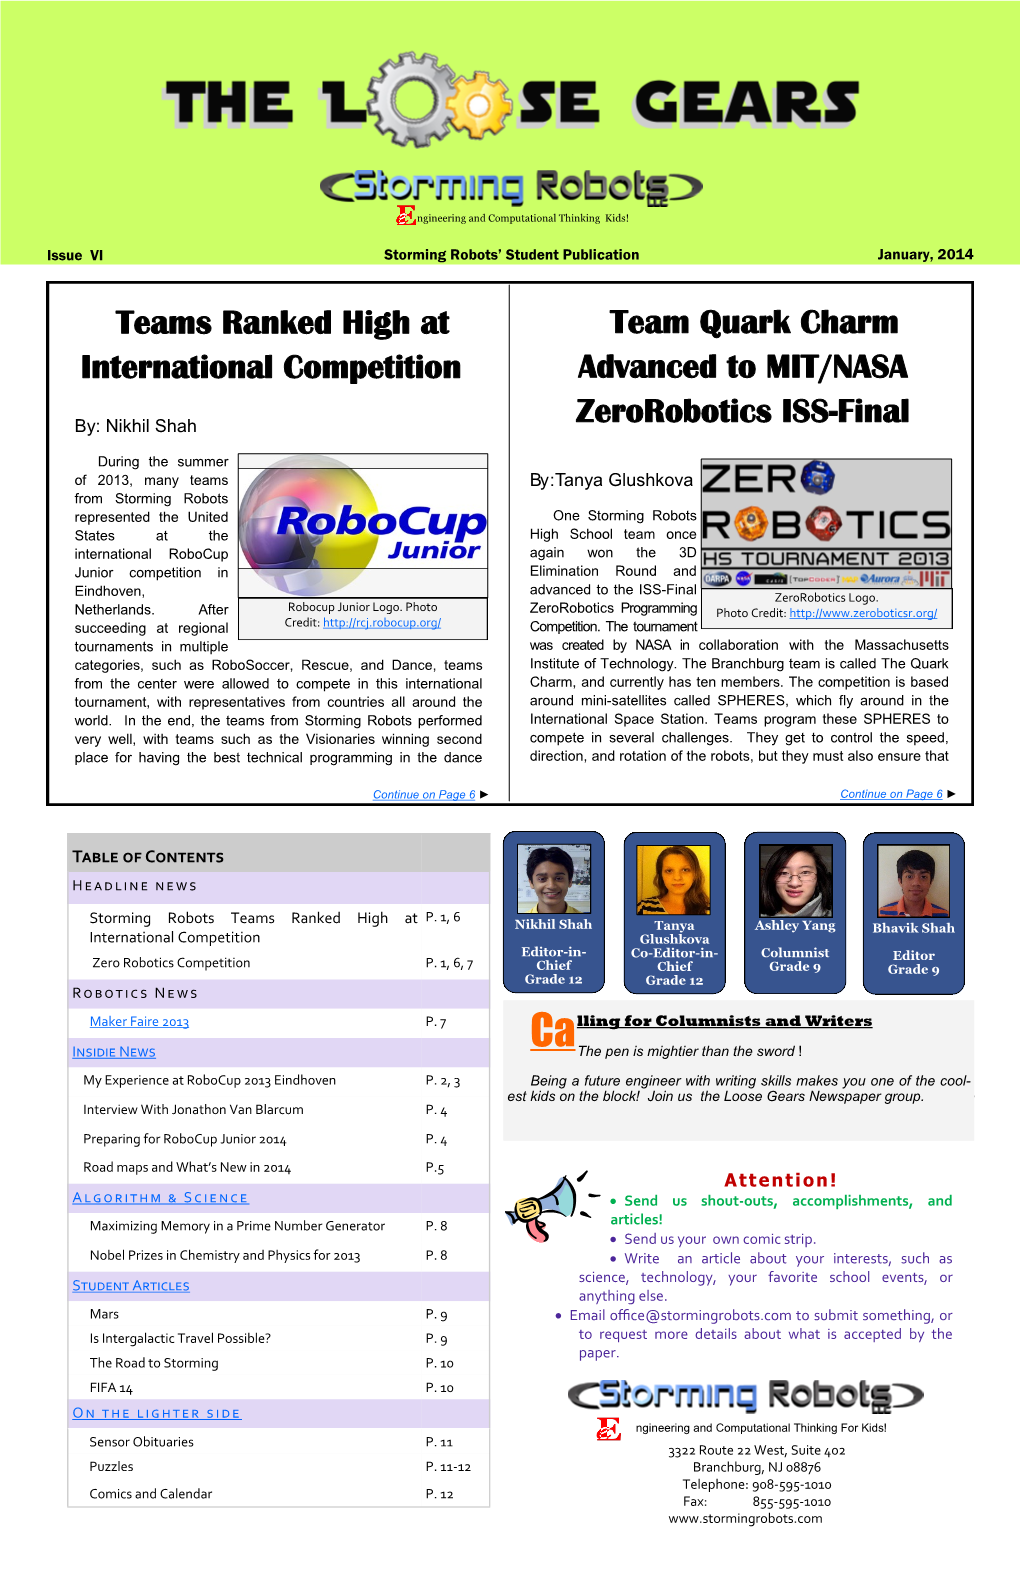 Teams Ranked High at International Competition Team Quark Charm Advanced to MIT/NASA Zerorobotics ISS-Final